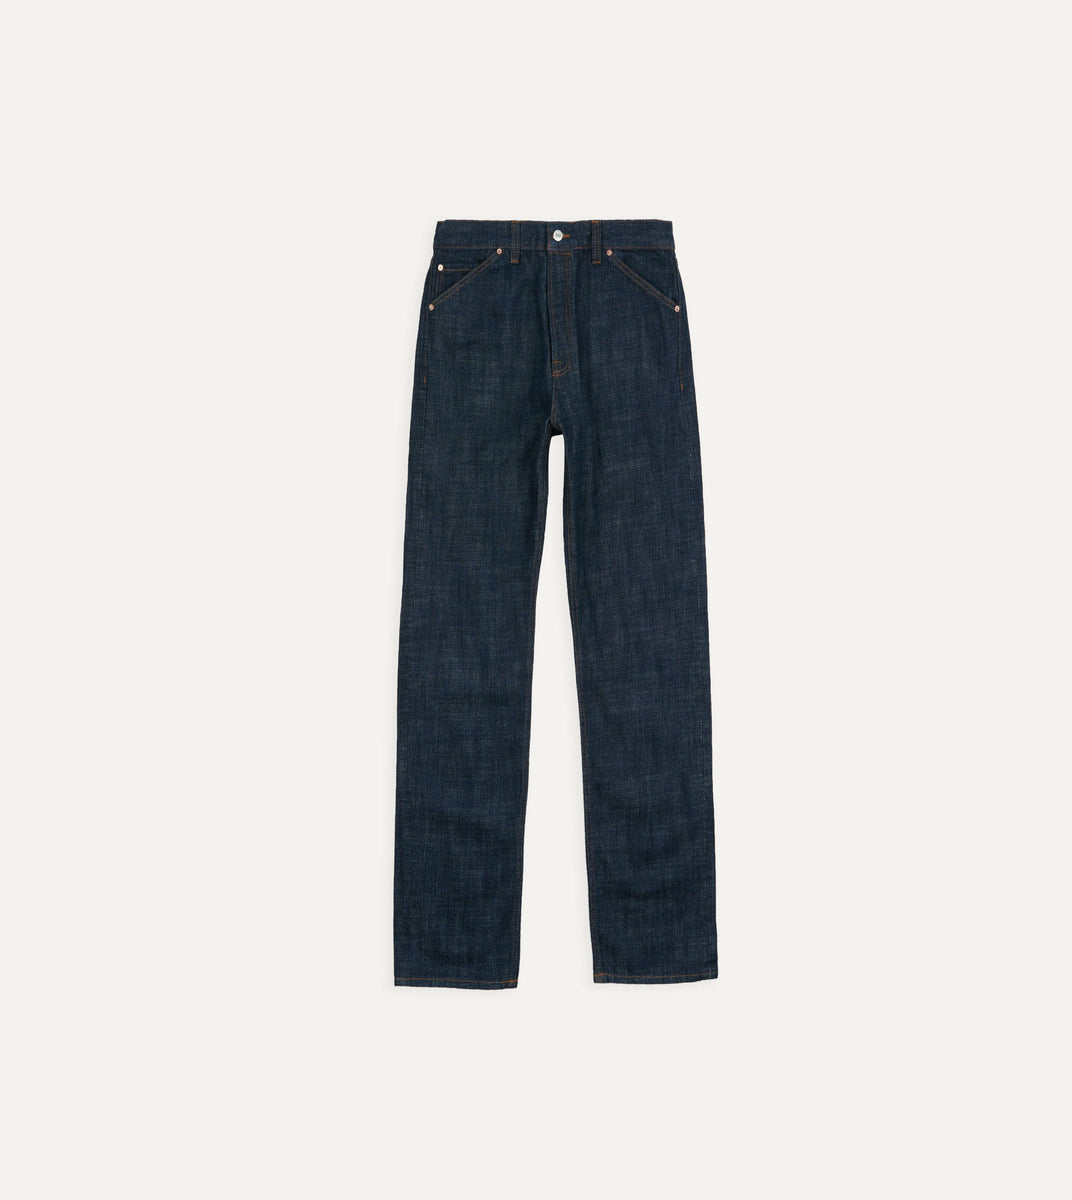 Indigo Rinse 15.5oz Japanese Selvedge Denim Five-Pocket Jeans – Drakes